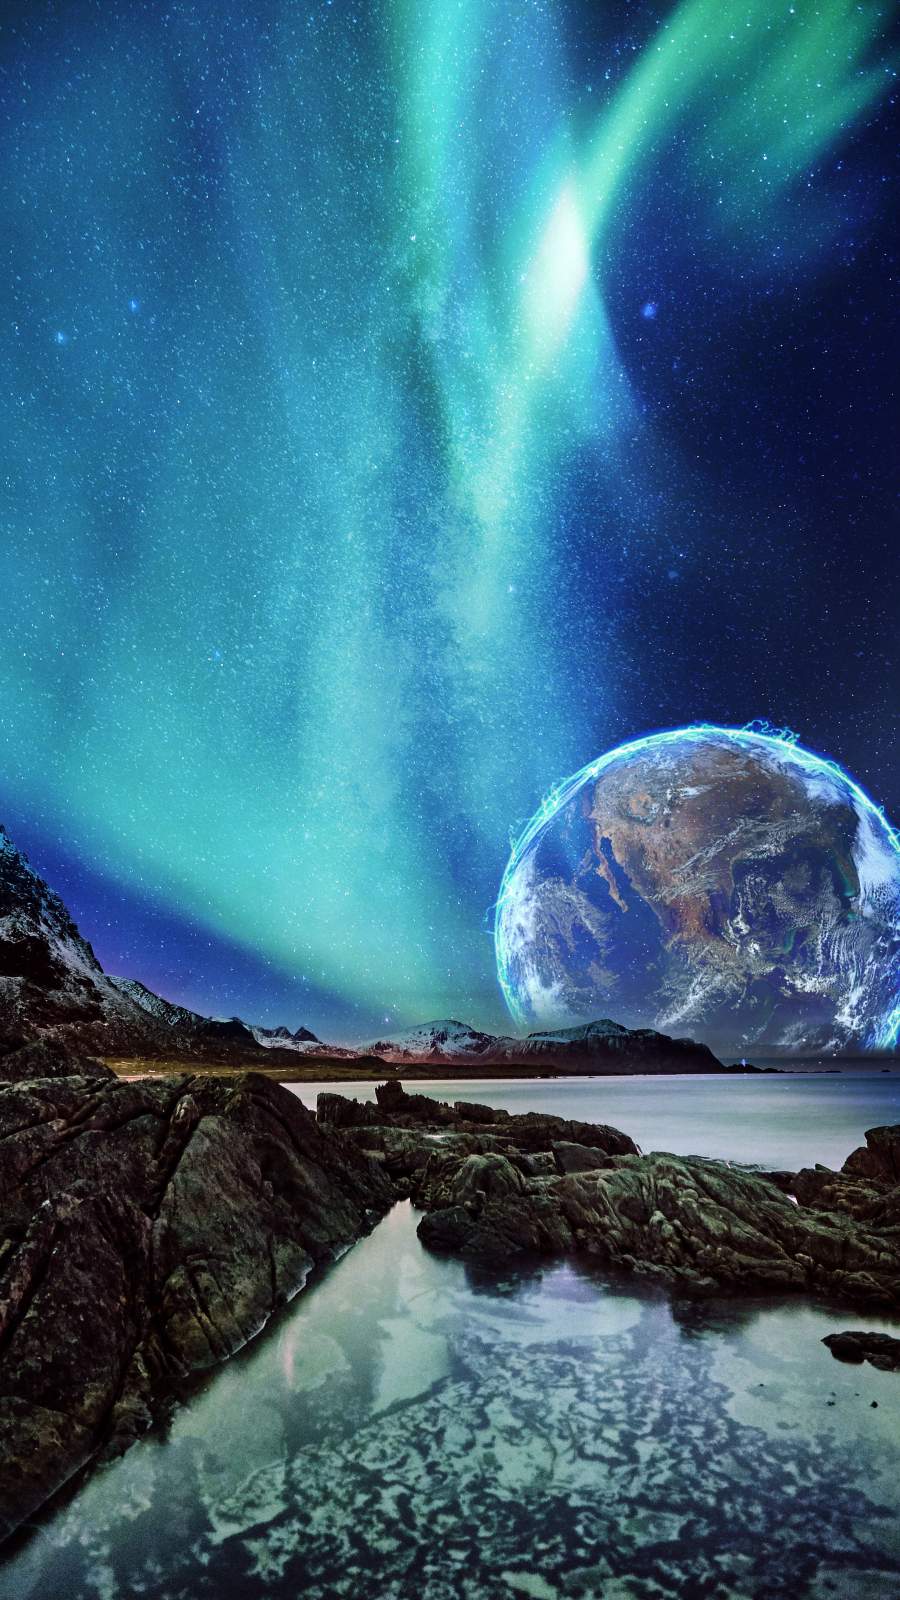 Near Earth Planet iPhone Wallpaper